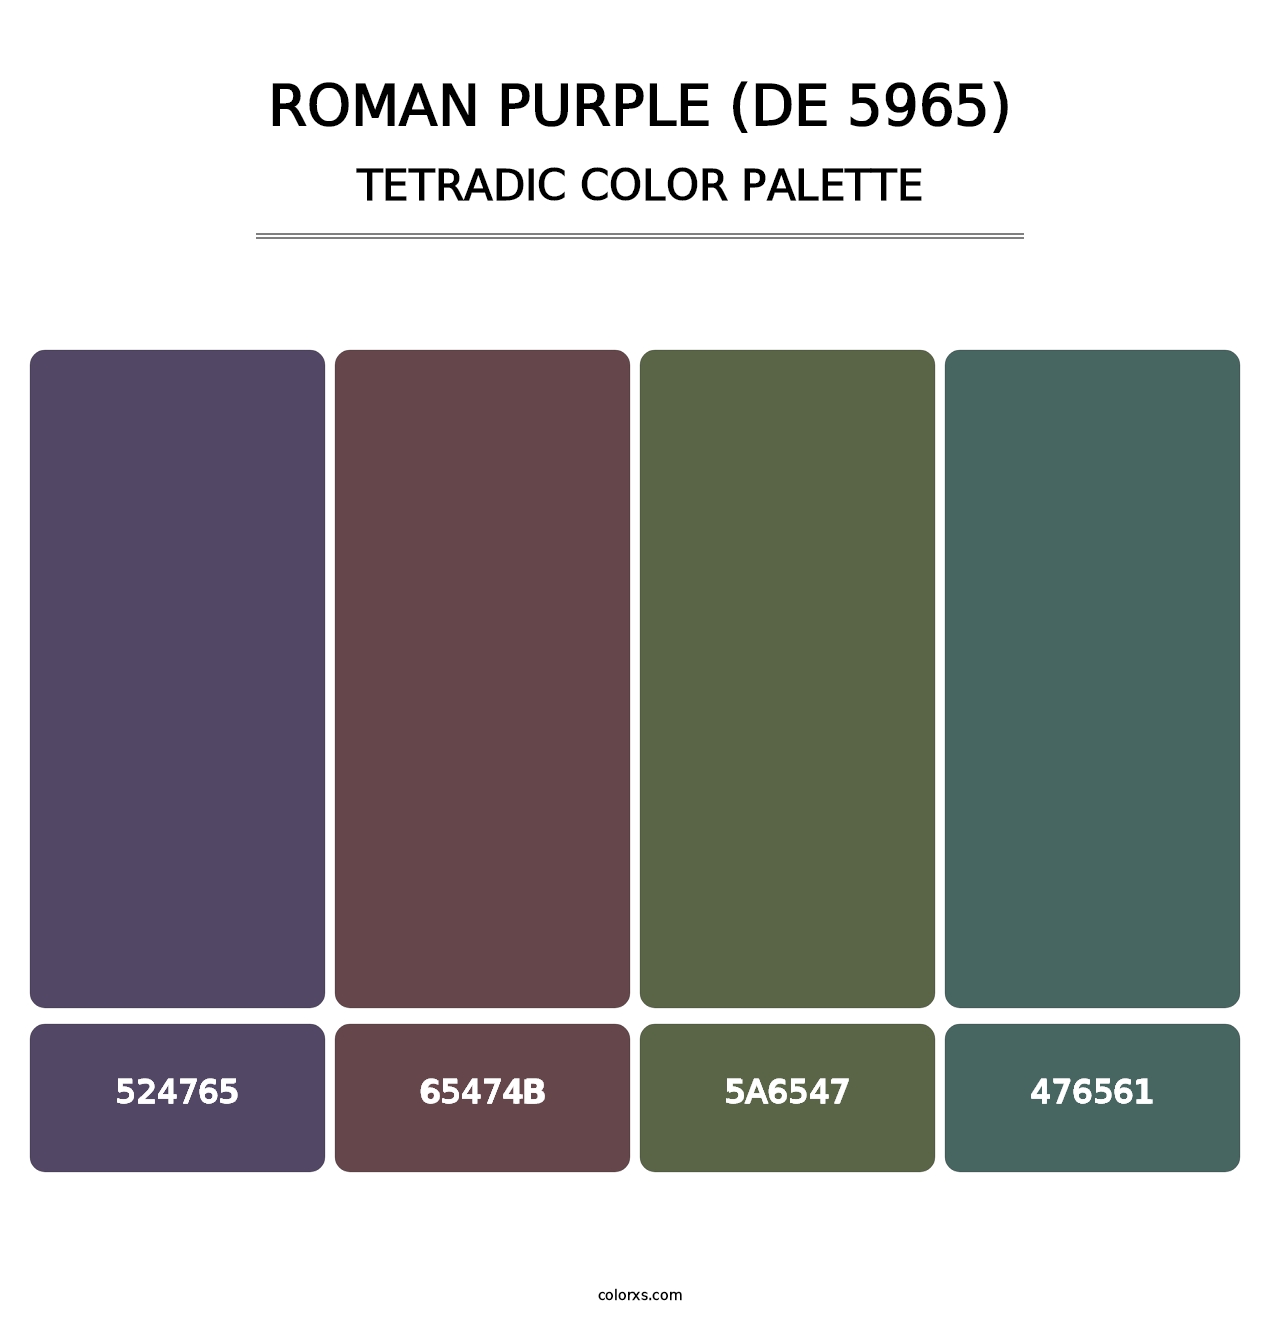 Roman Purple (DE 5965) - Tetradic Color Palette